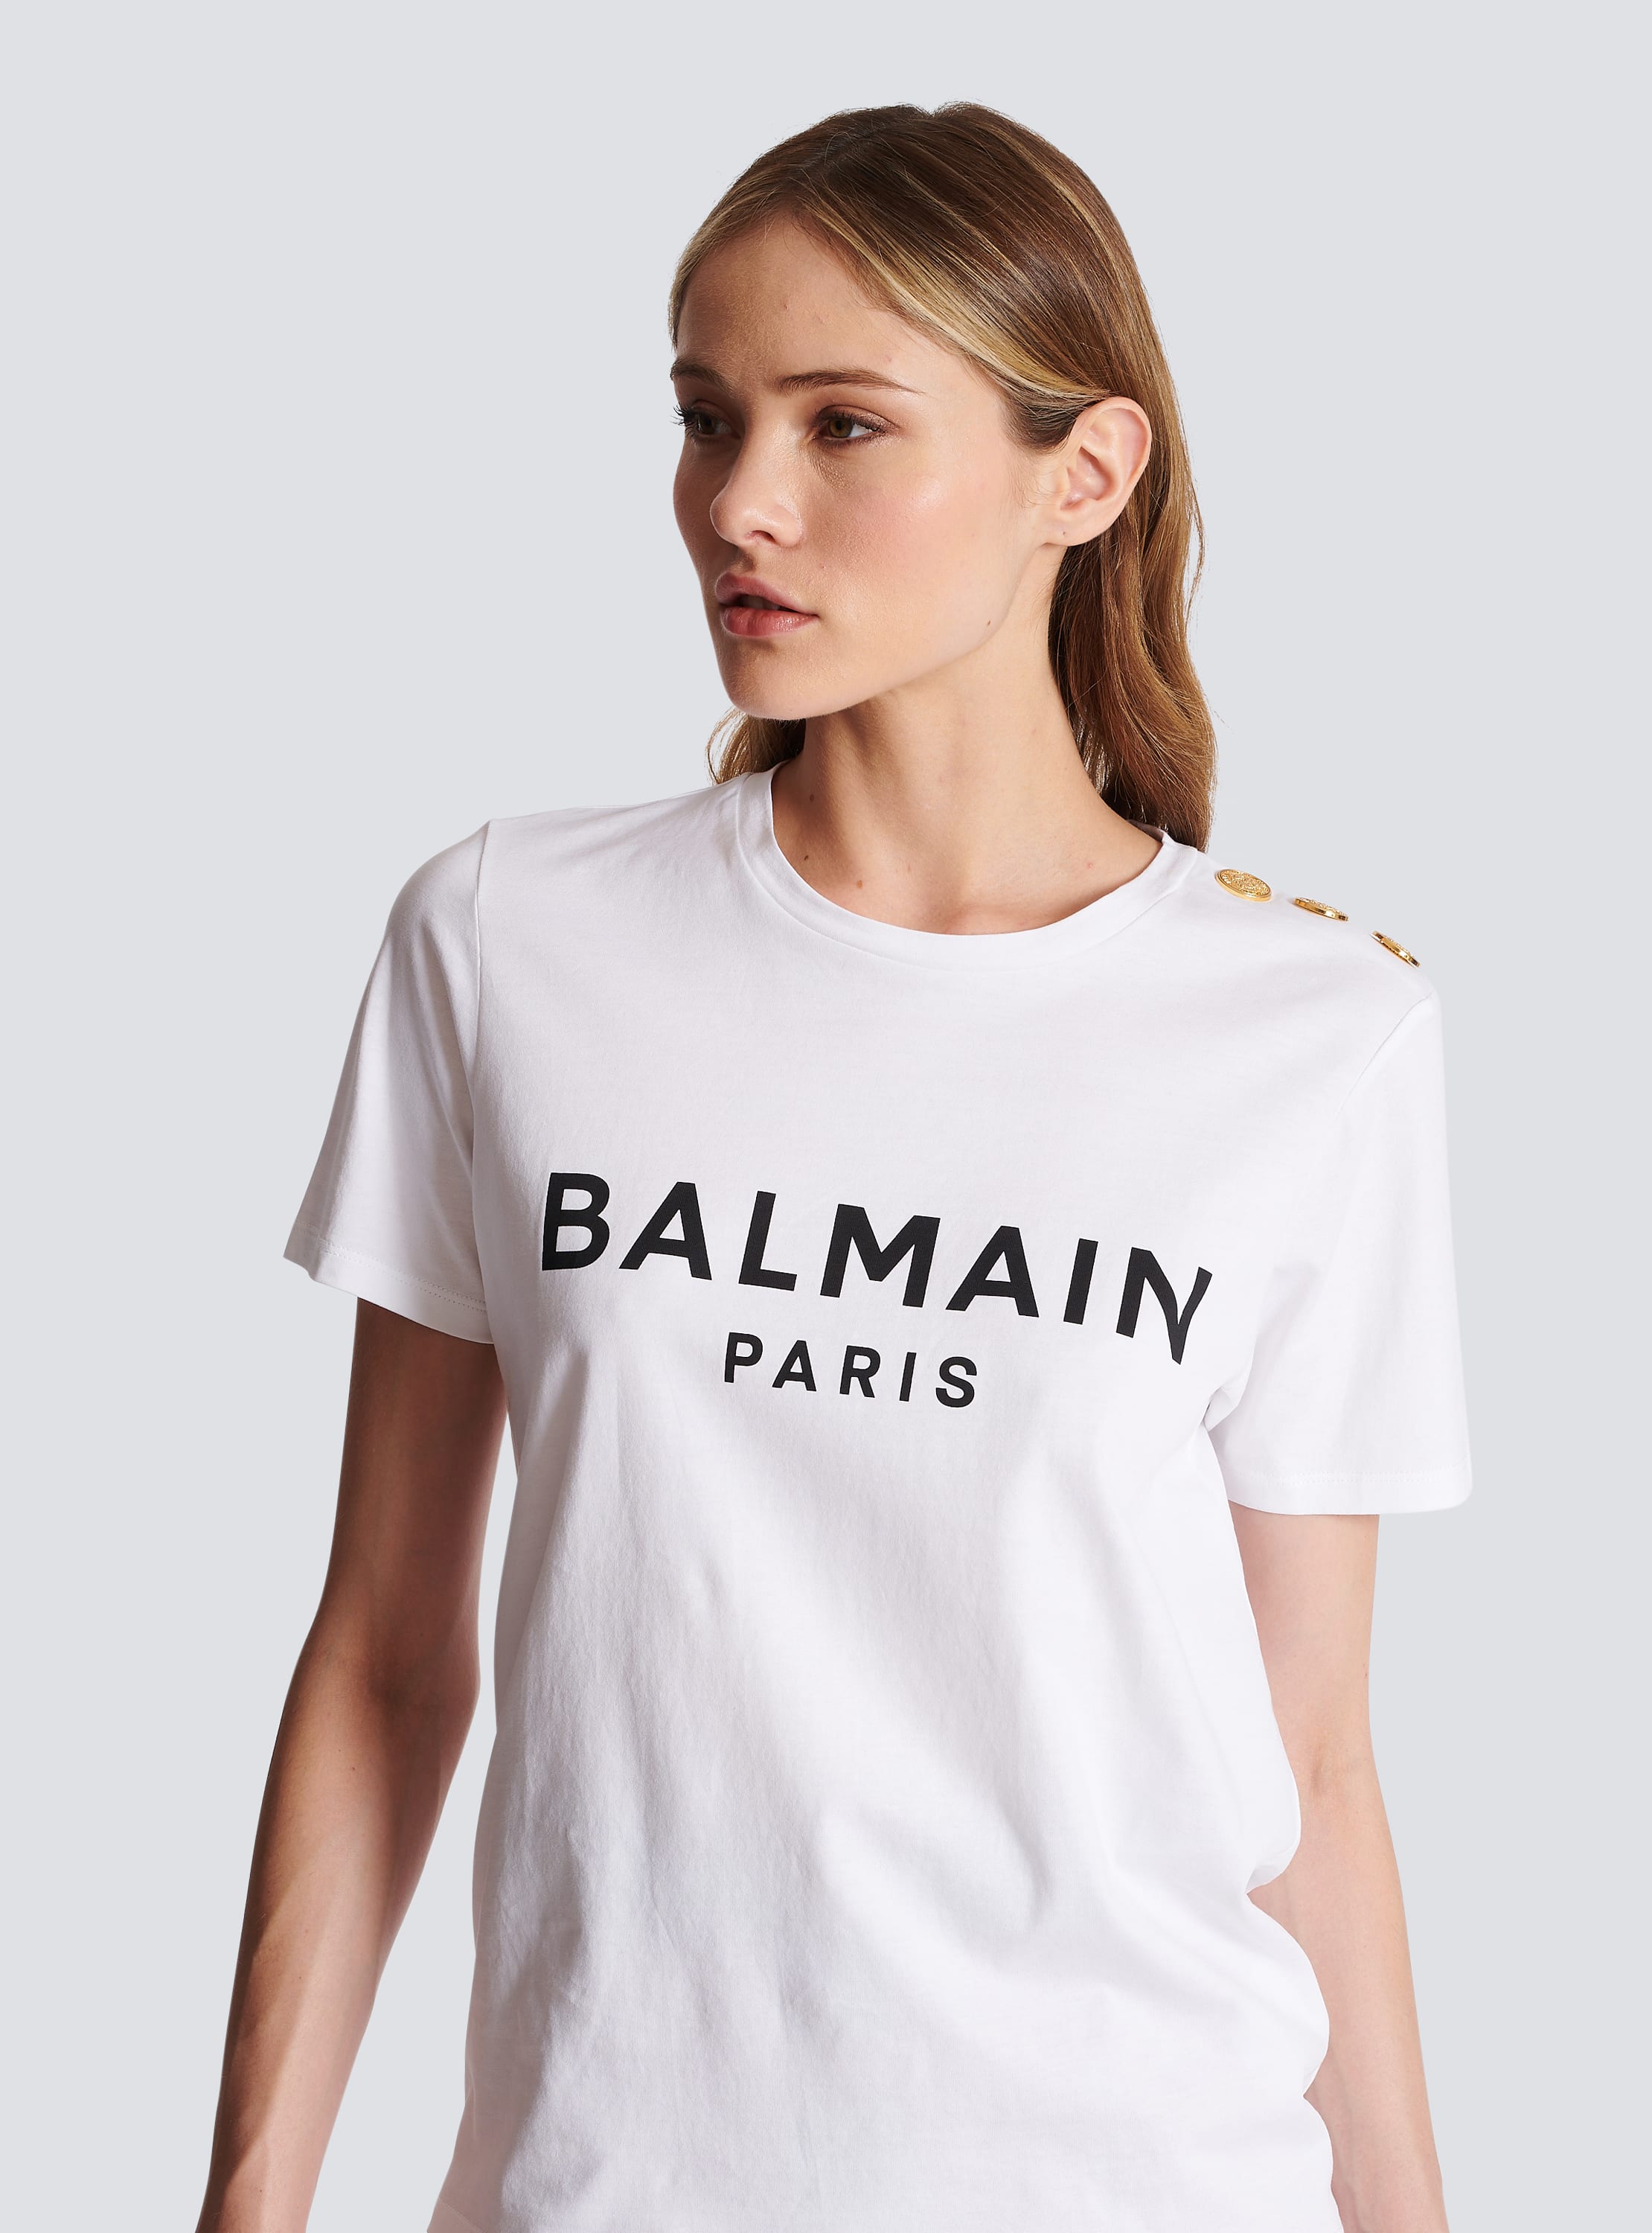 Balmain Paris プリントTシャツ